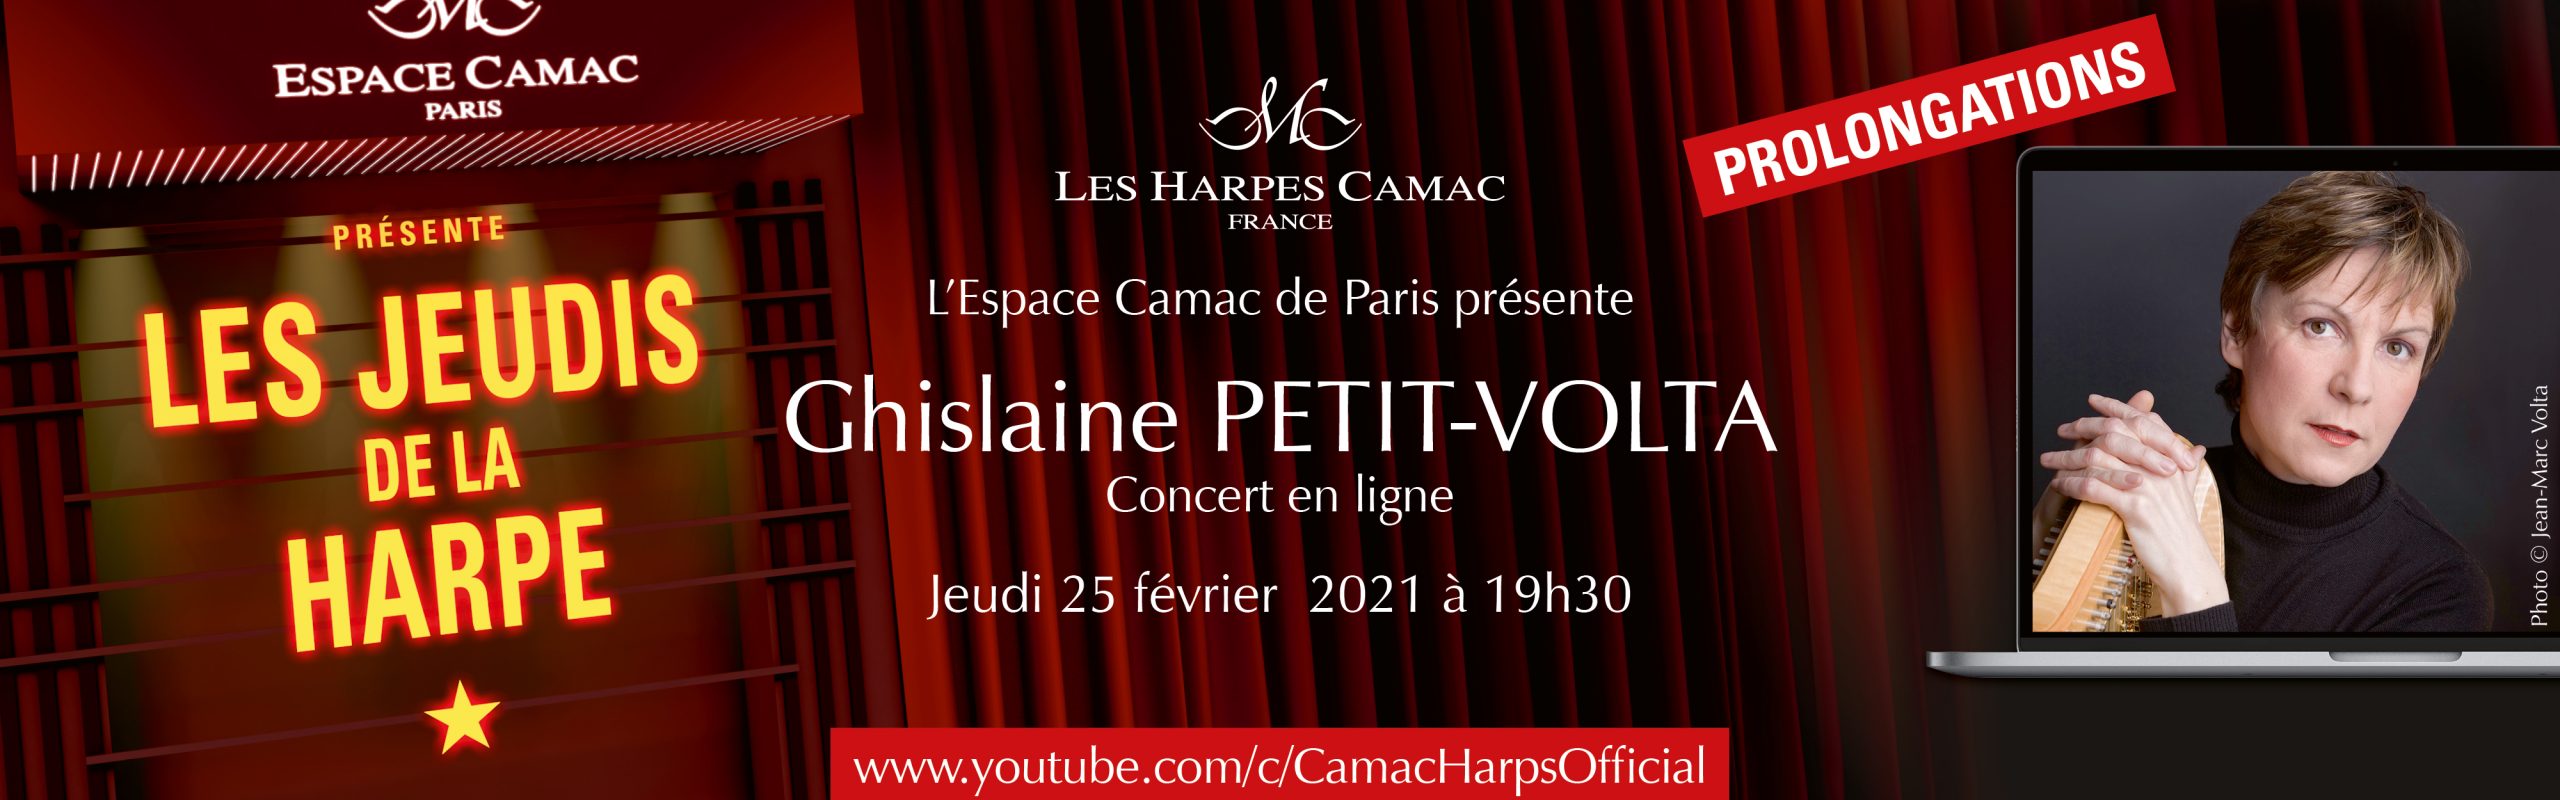 Les Jeudis de la Harpe : Ghislaine Petit-Volta